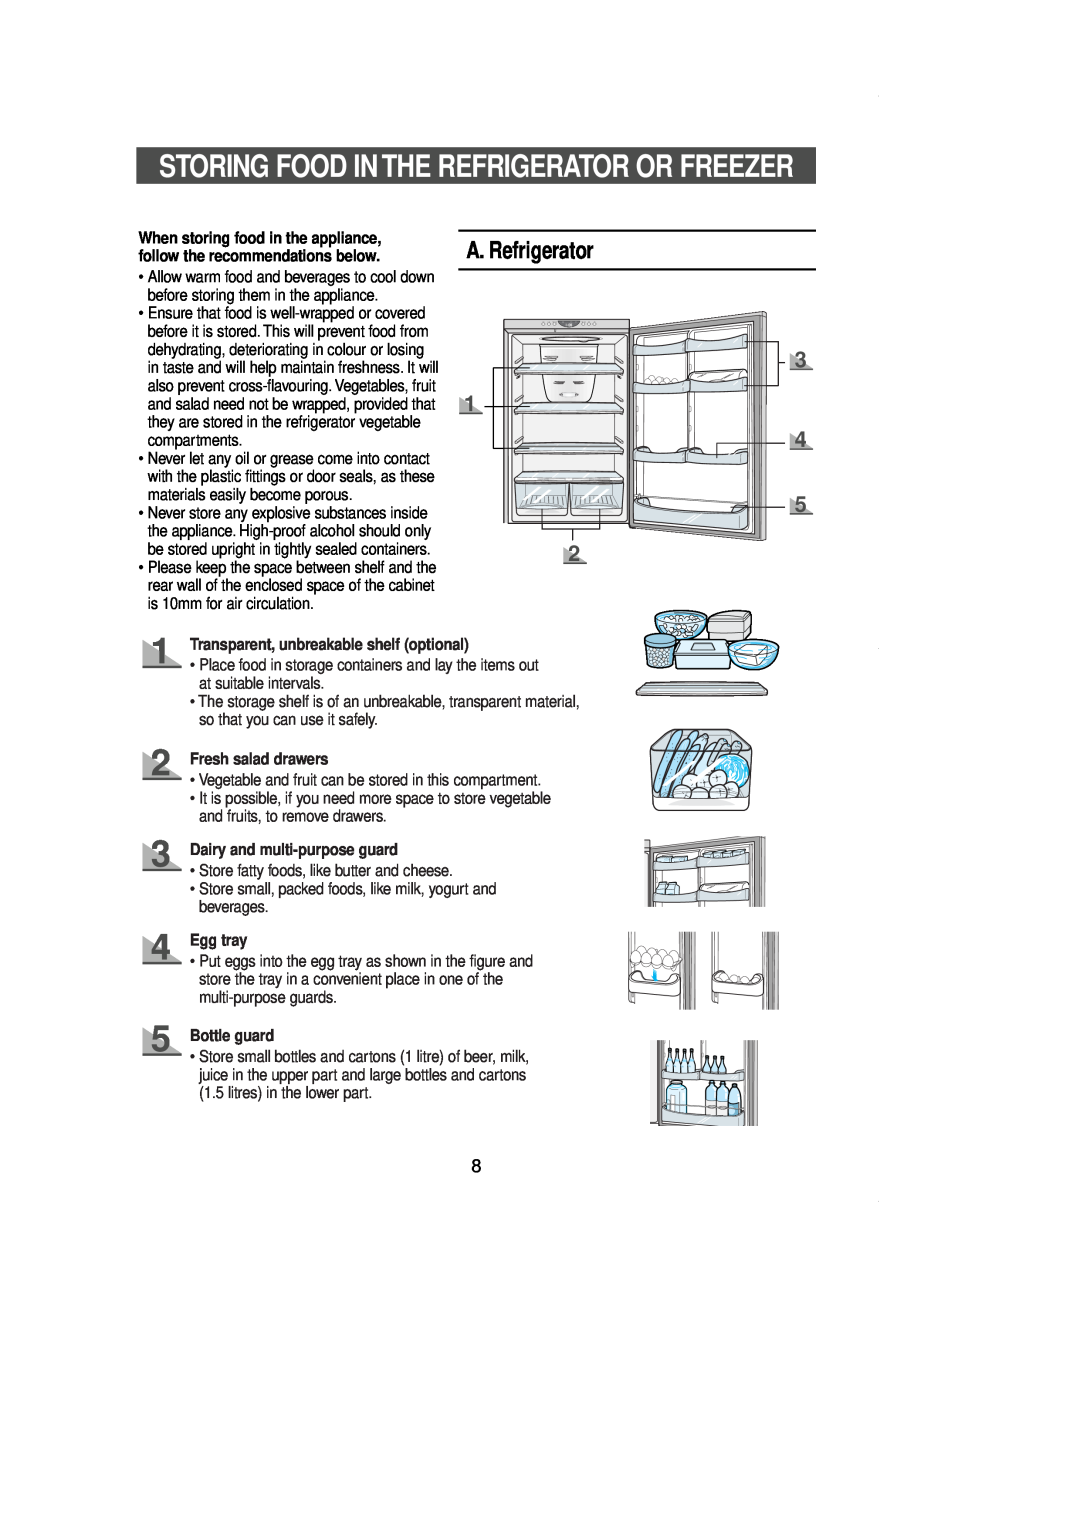 Samsung SR-L36 manual A. Refrigerator, Storing Food In The Refrigerator Or Freezer, Transparent, unbreakable shelf optional 